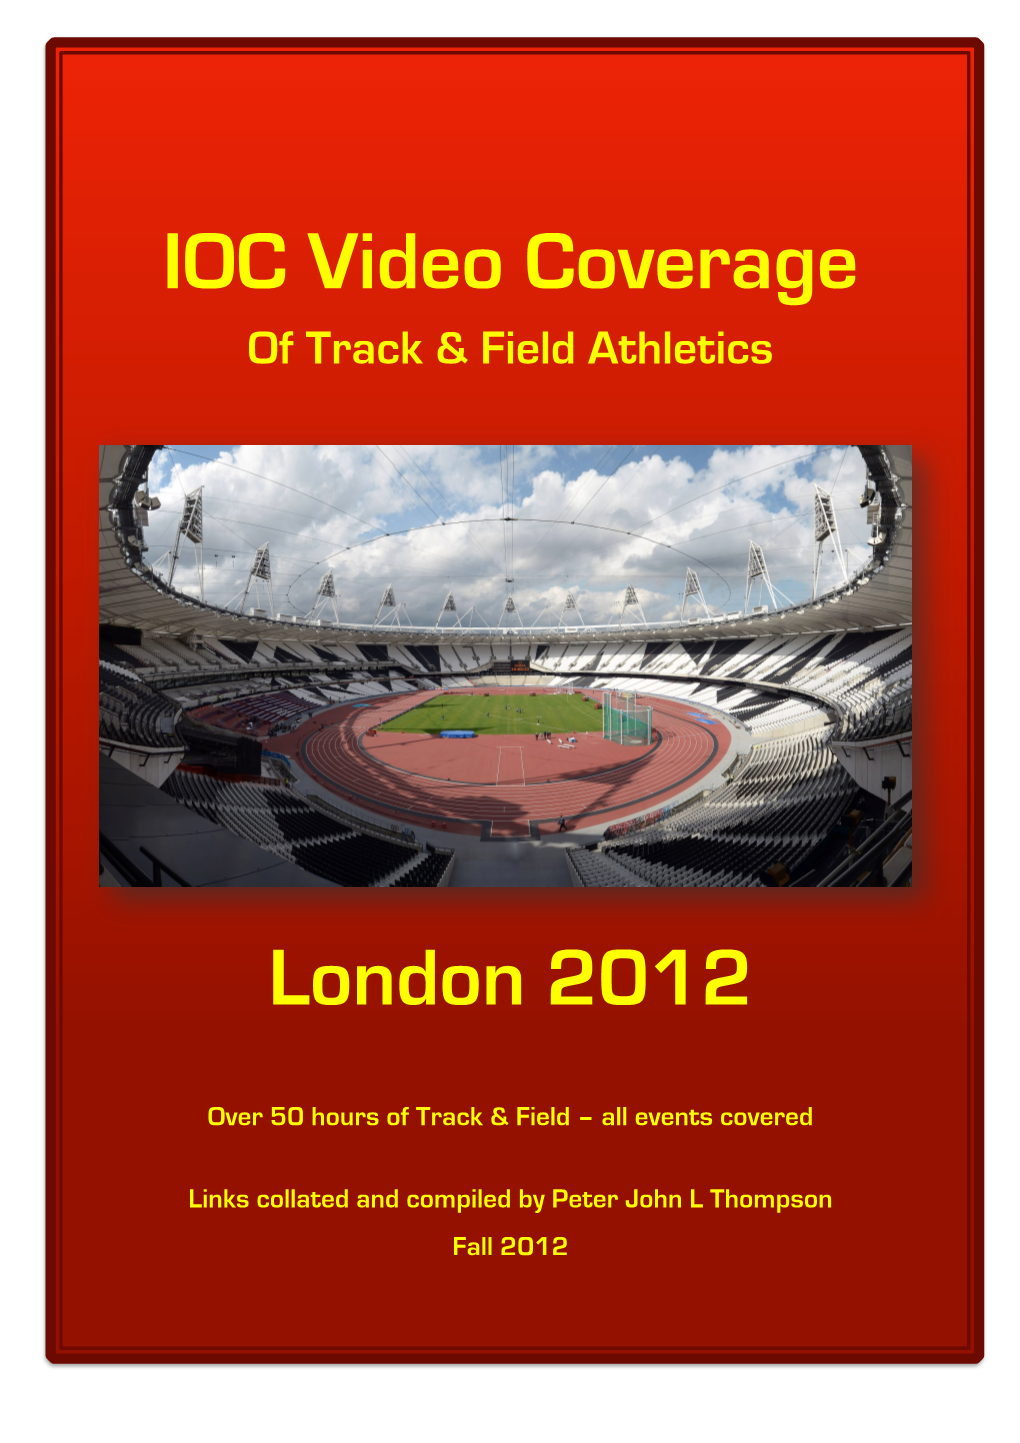 IOC Video Coverage London 2012